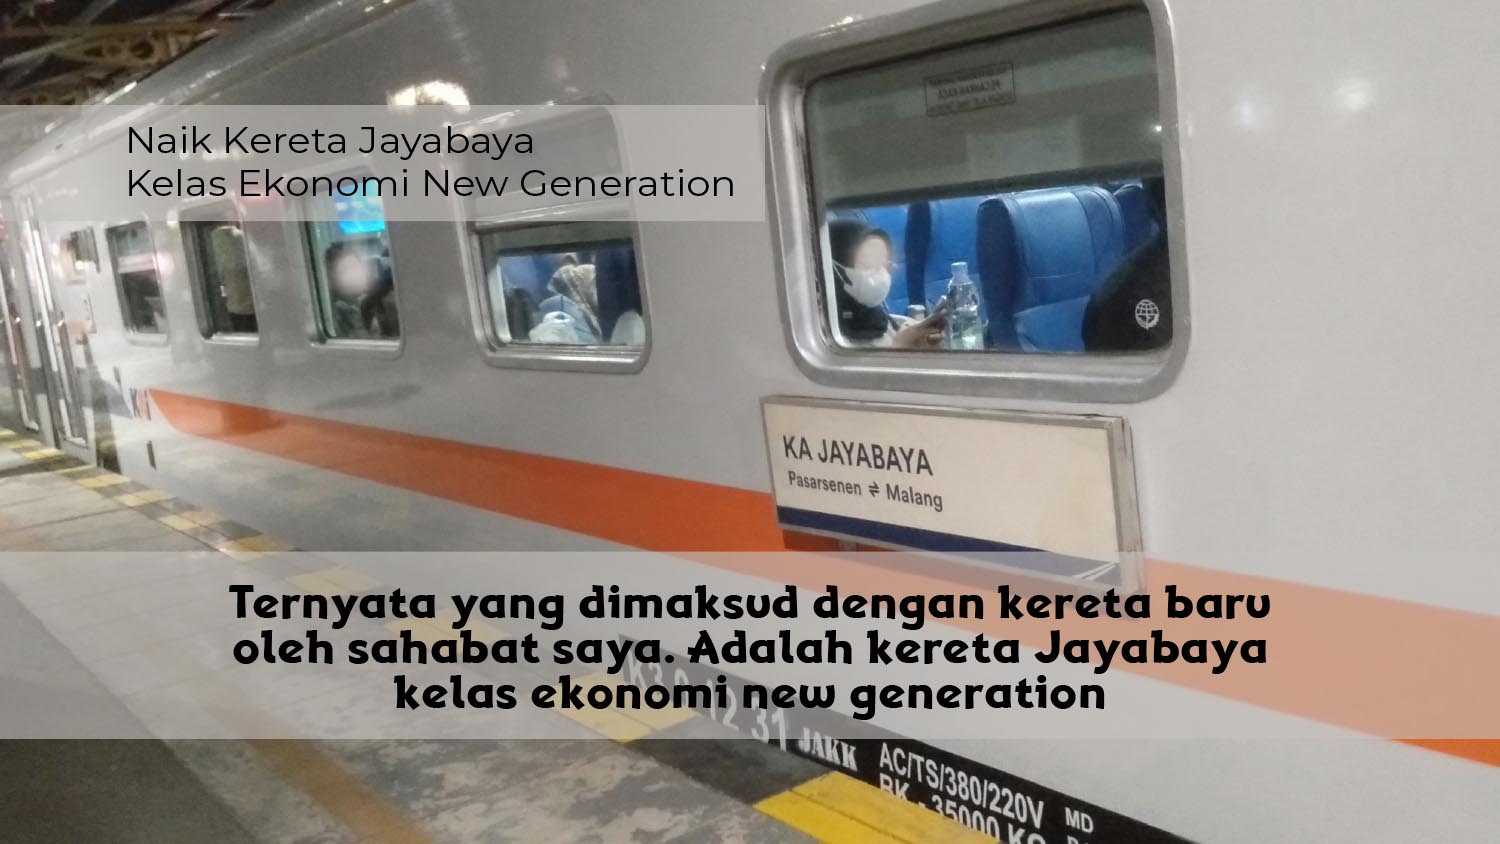 kereta Jayabaya kelas ekonomi new generation